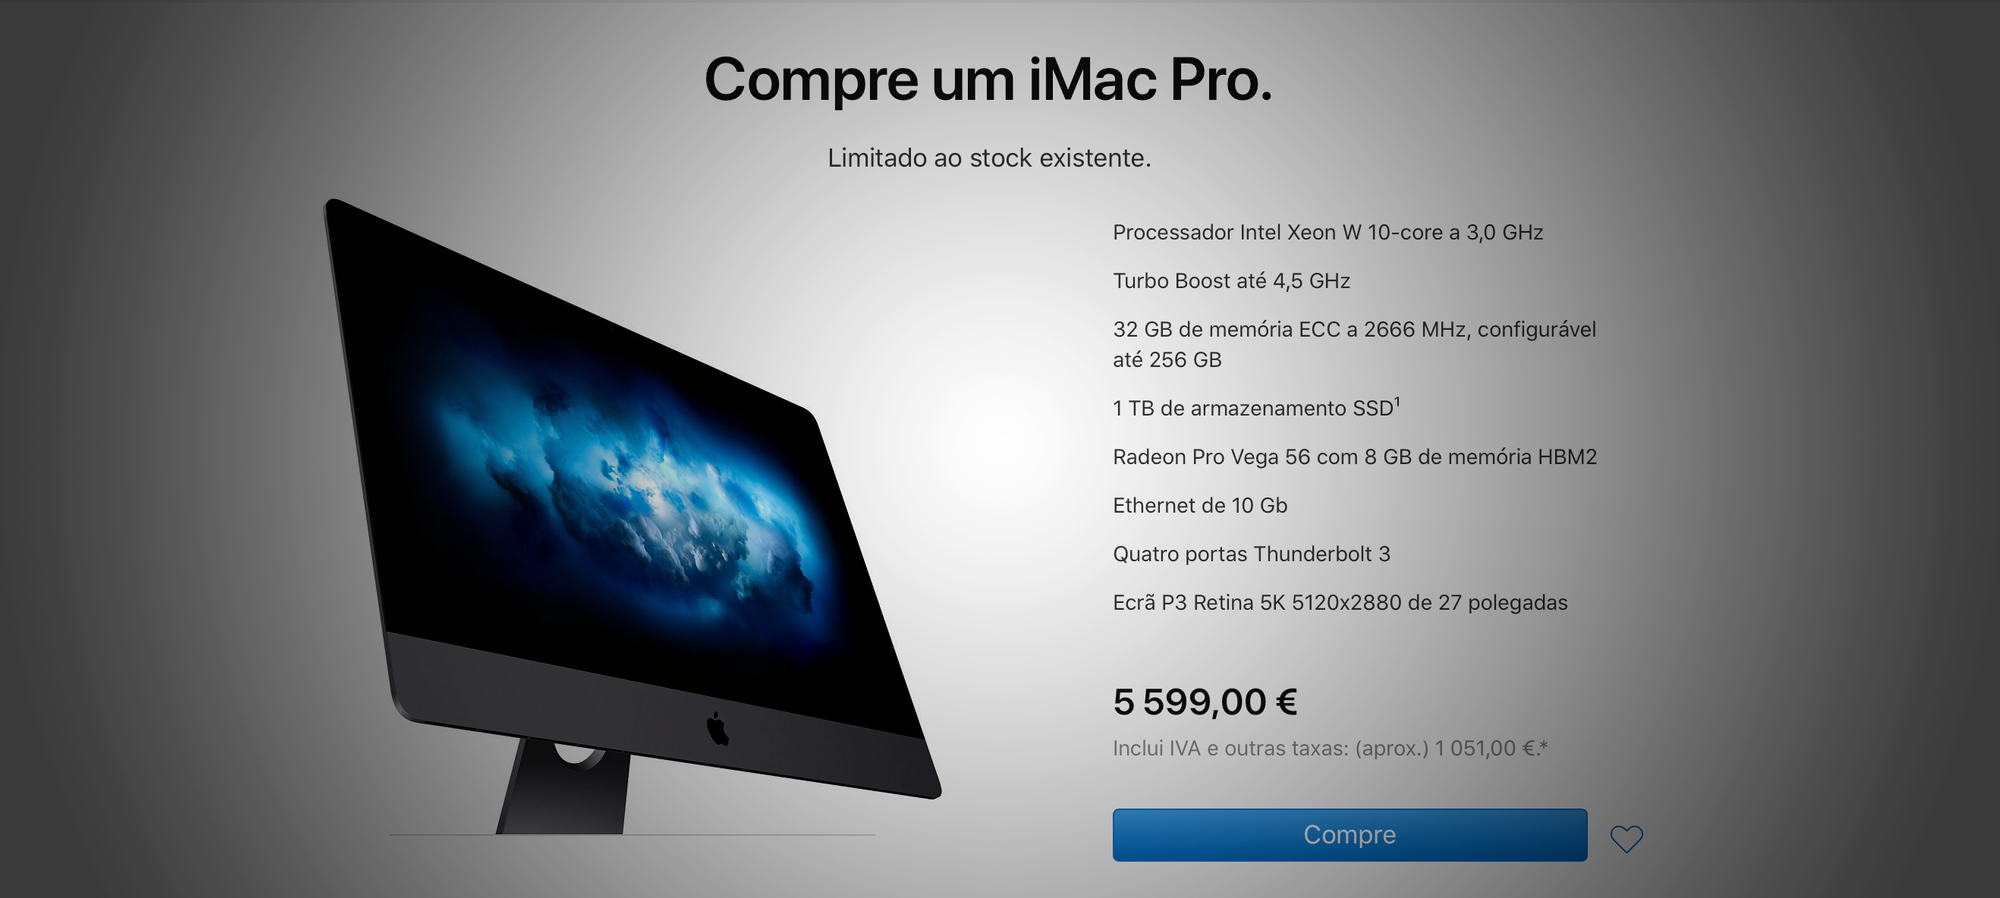 "Limitado ao Stock existente": iMac Pro descontinuado